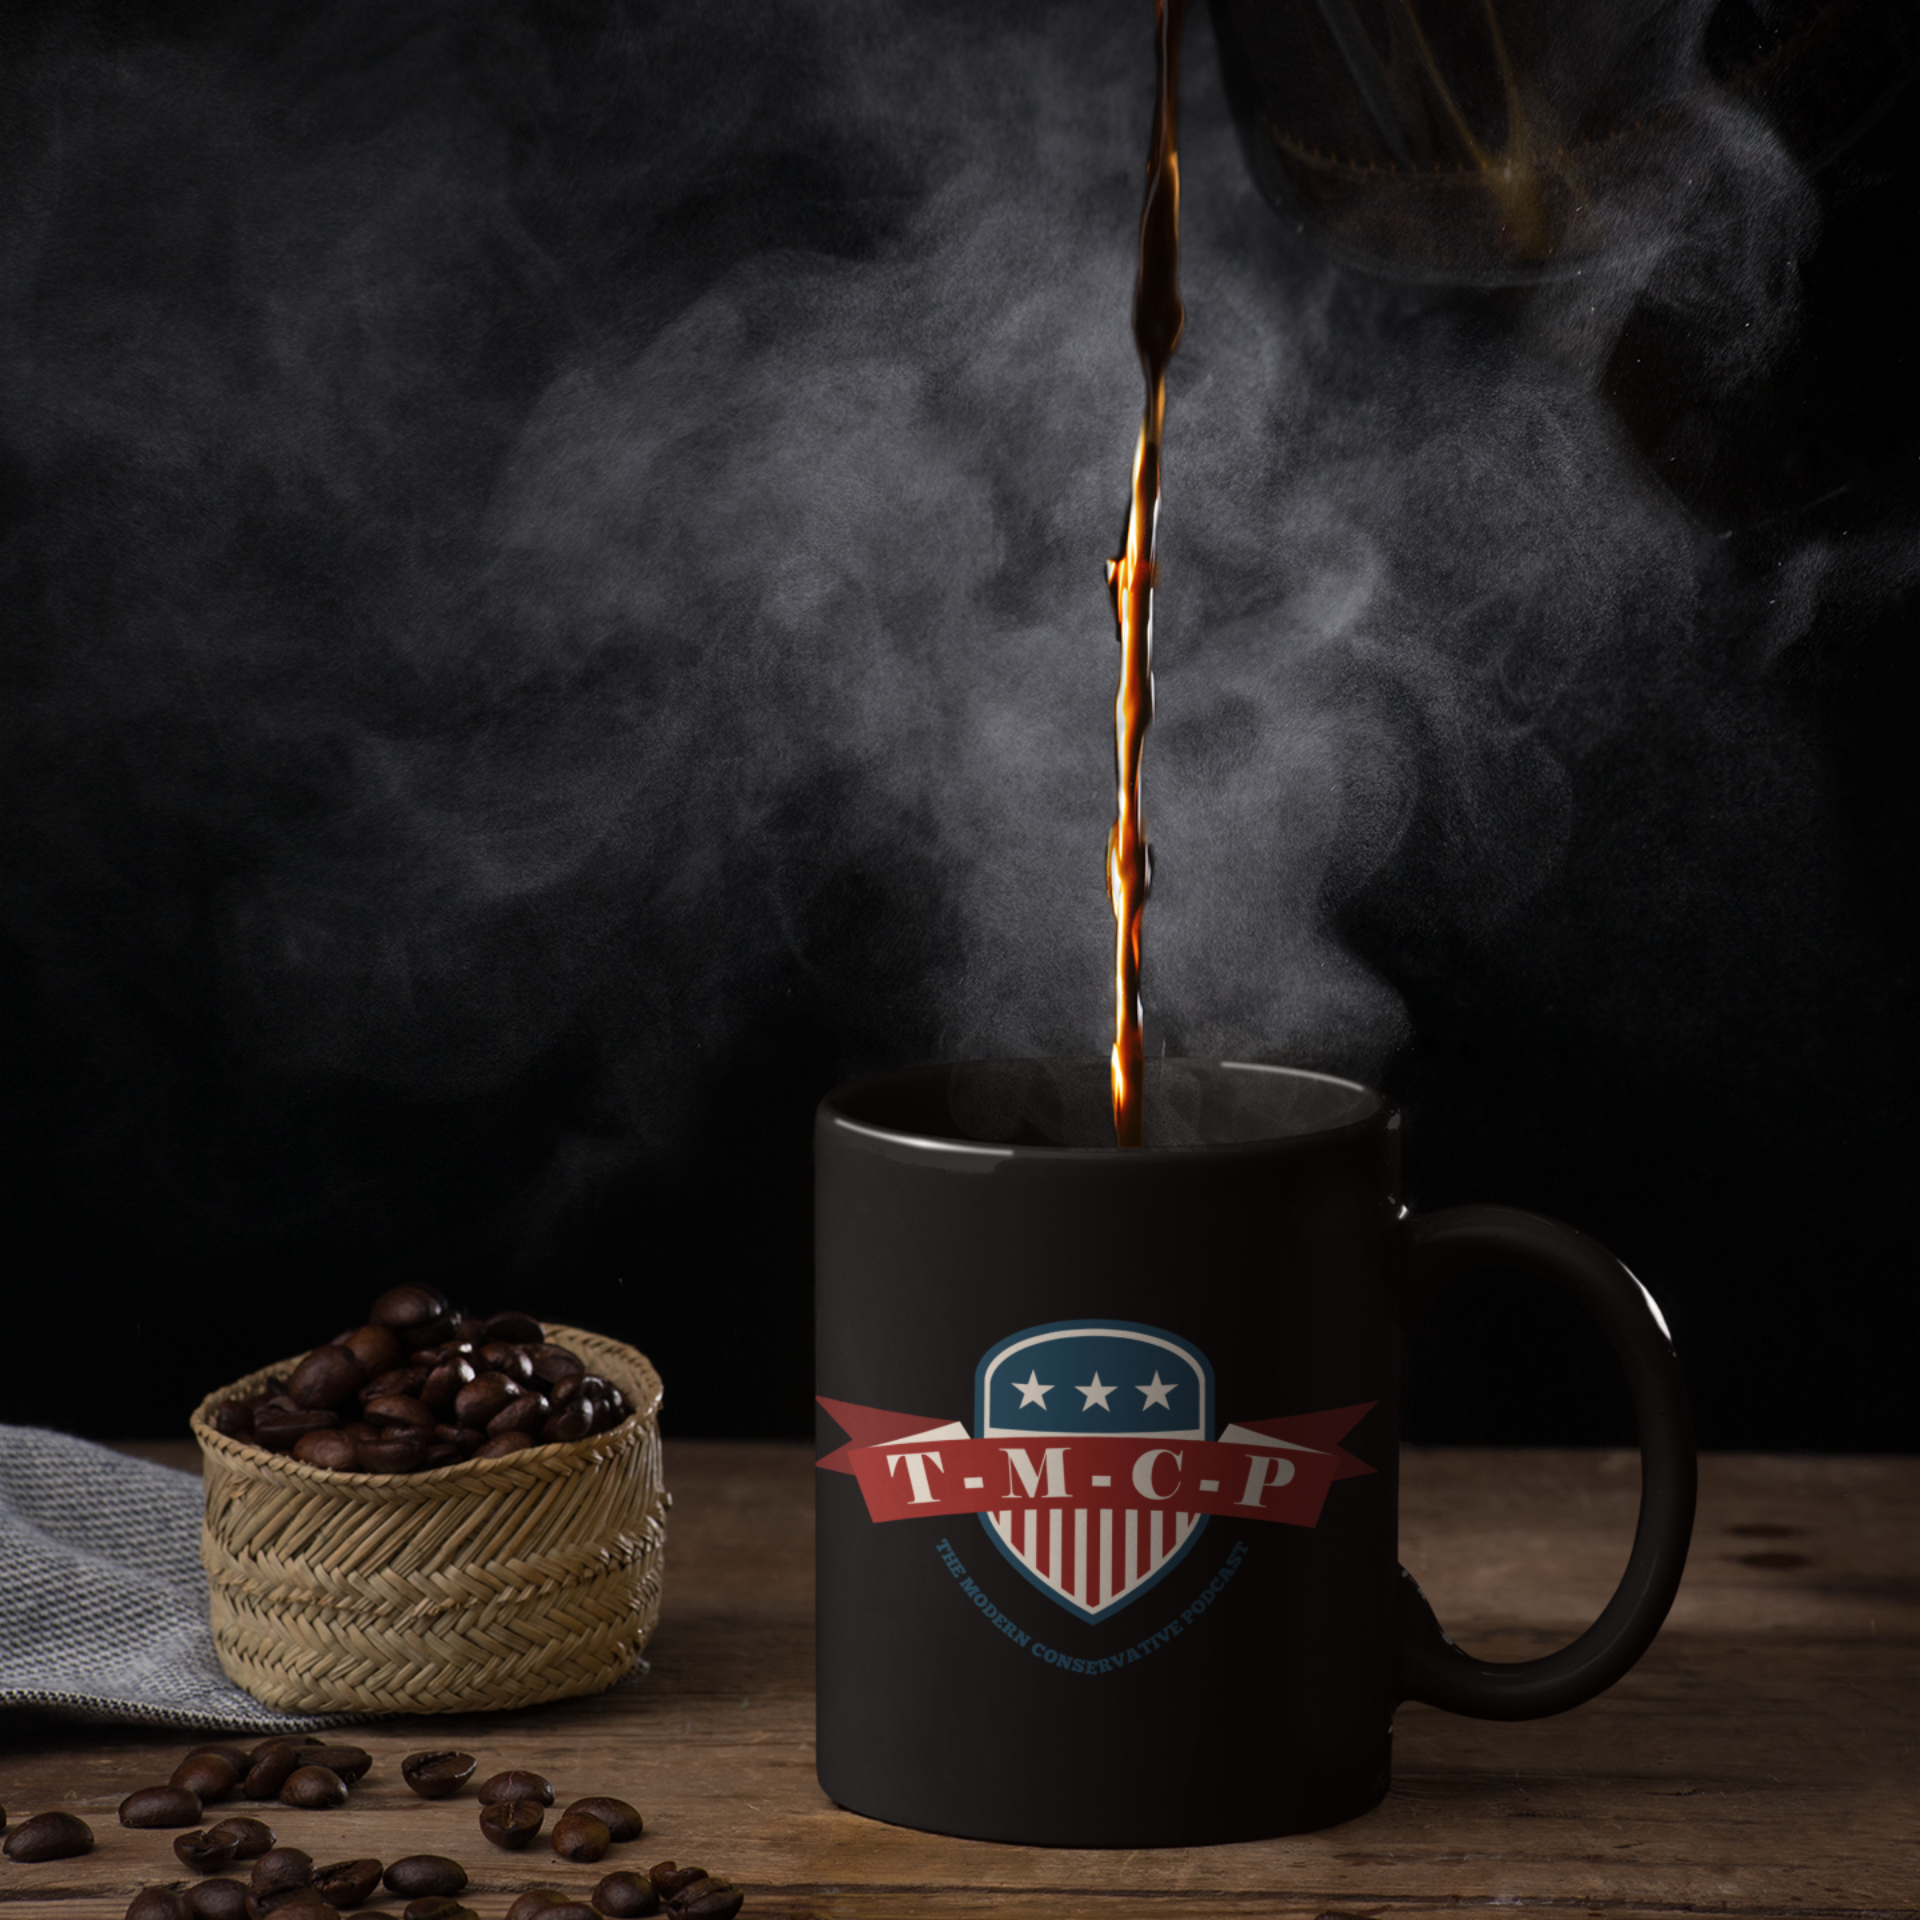 The Modern Conservative Podcast inside black coffee mug